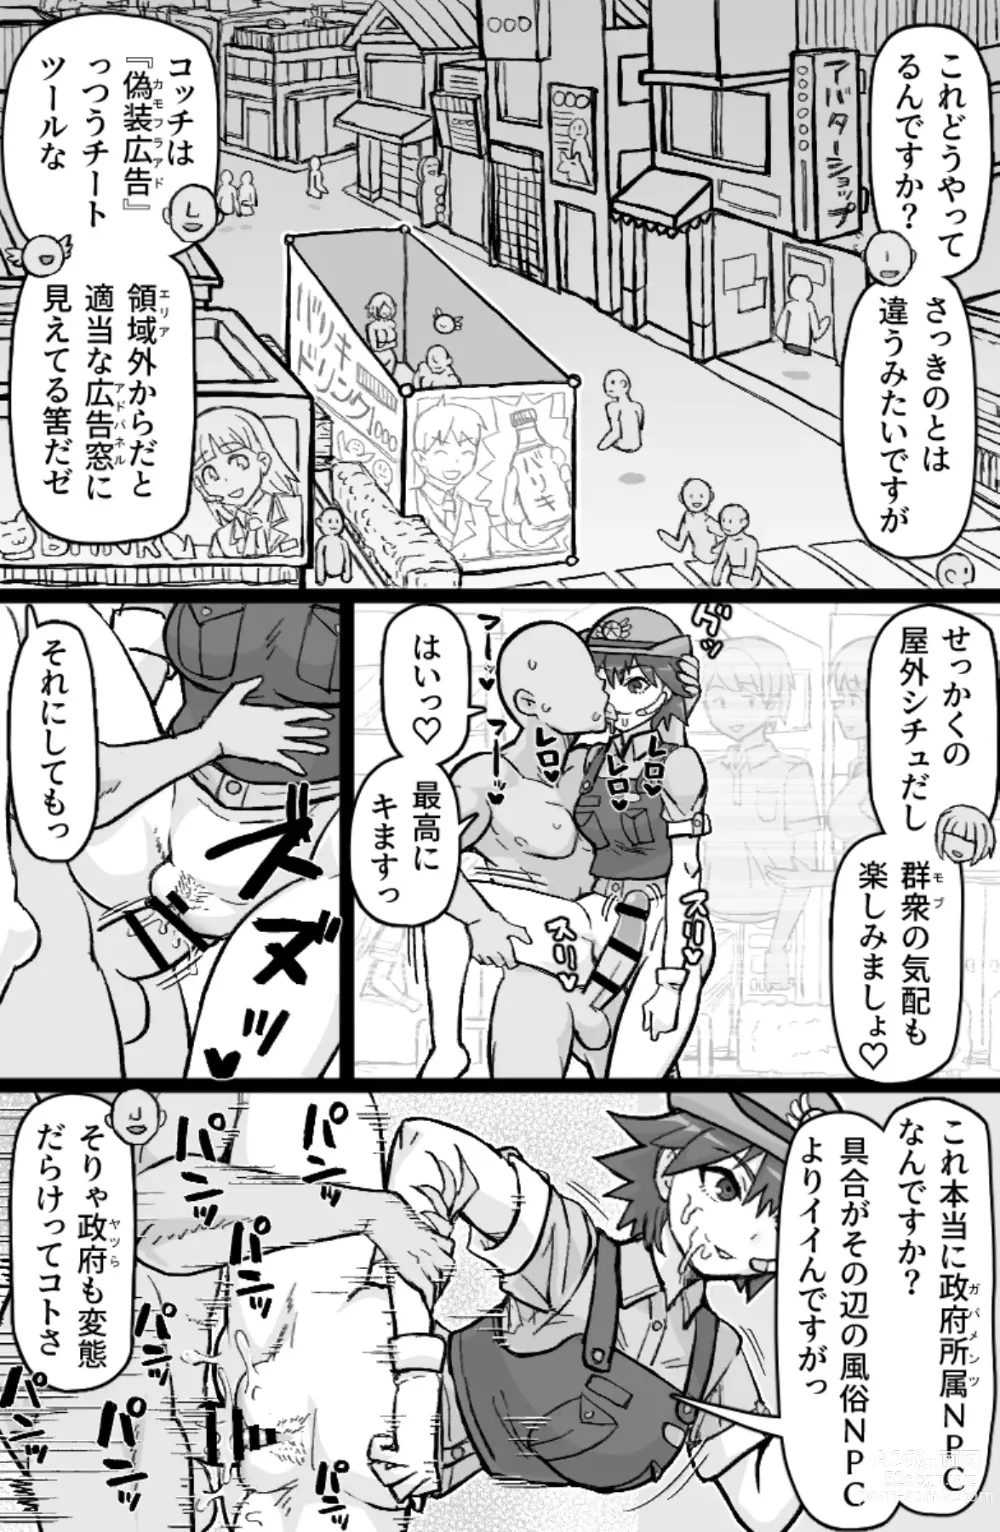 Page 12 of doujinshi Hataraku! NPCFxxk